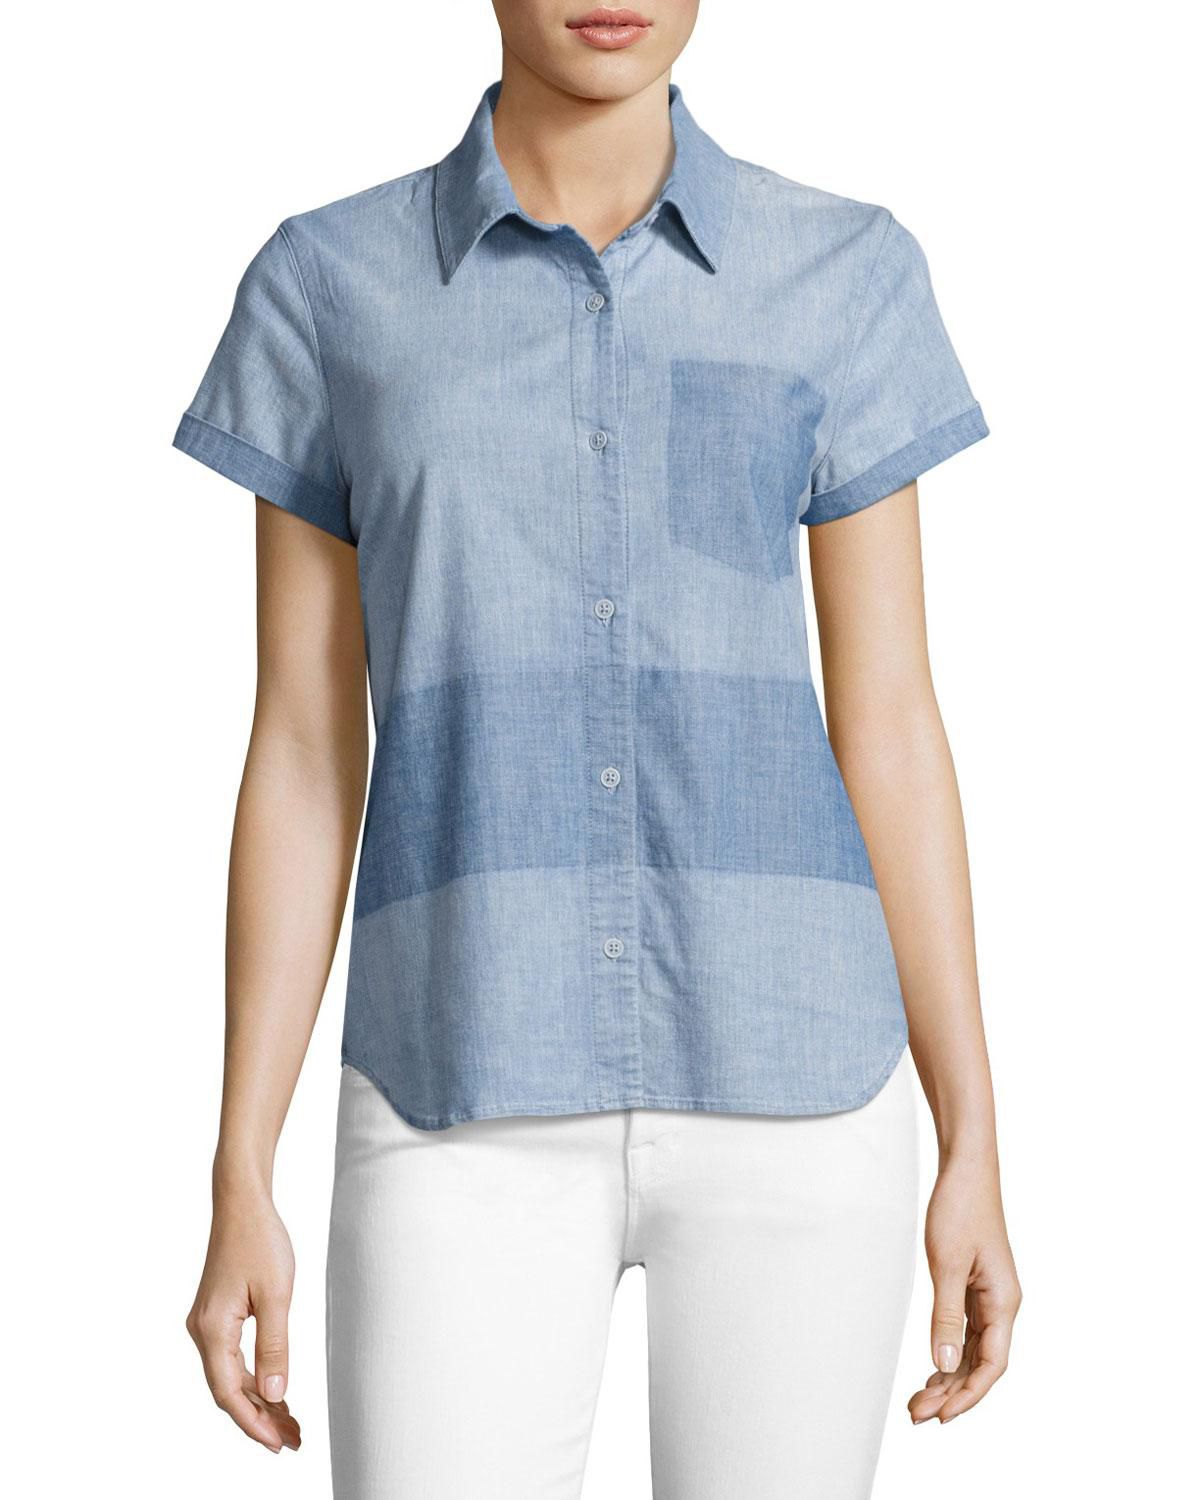 Wylie Two-Tone Denim Short-Sleeve Shirt